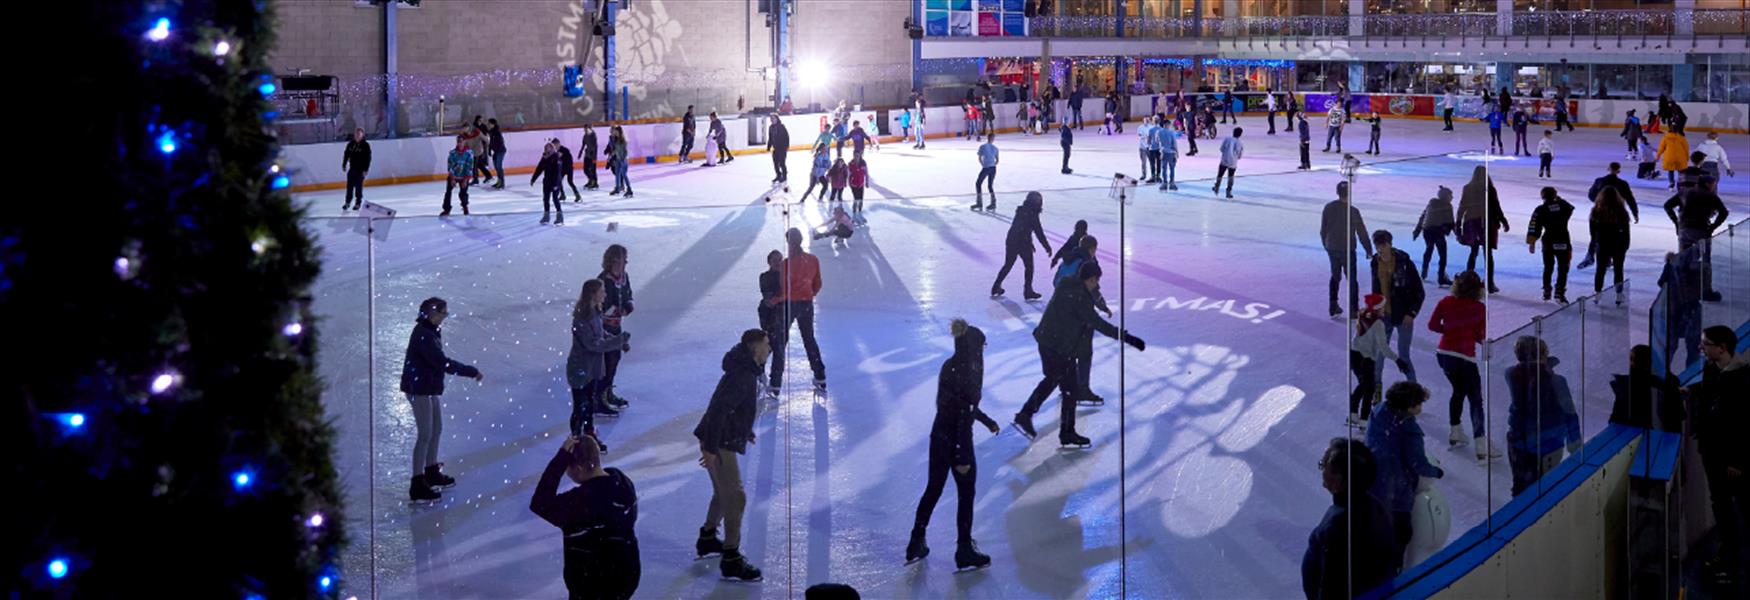 Christmas Skating at The National Ice Centre